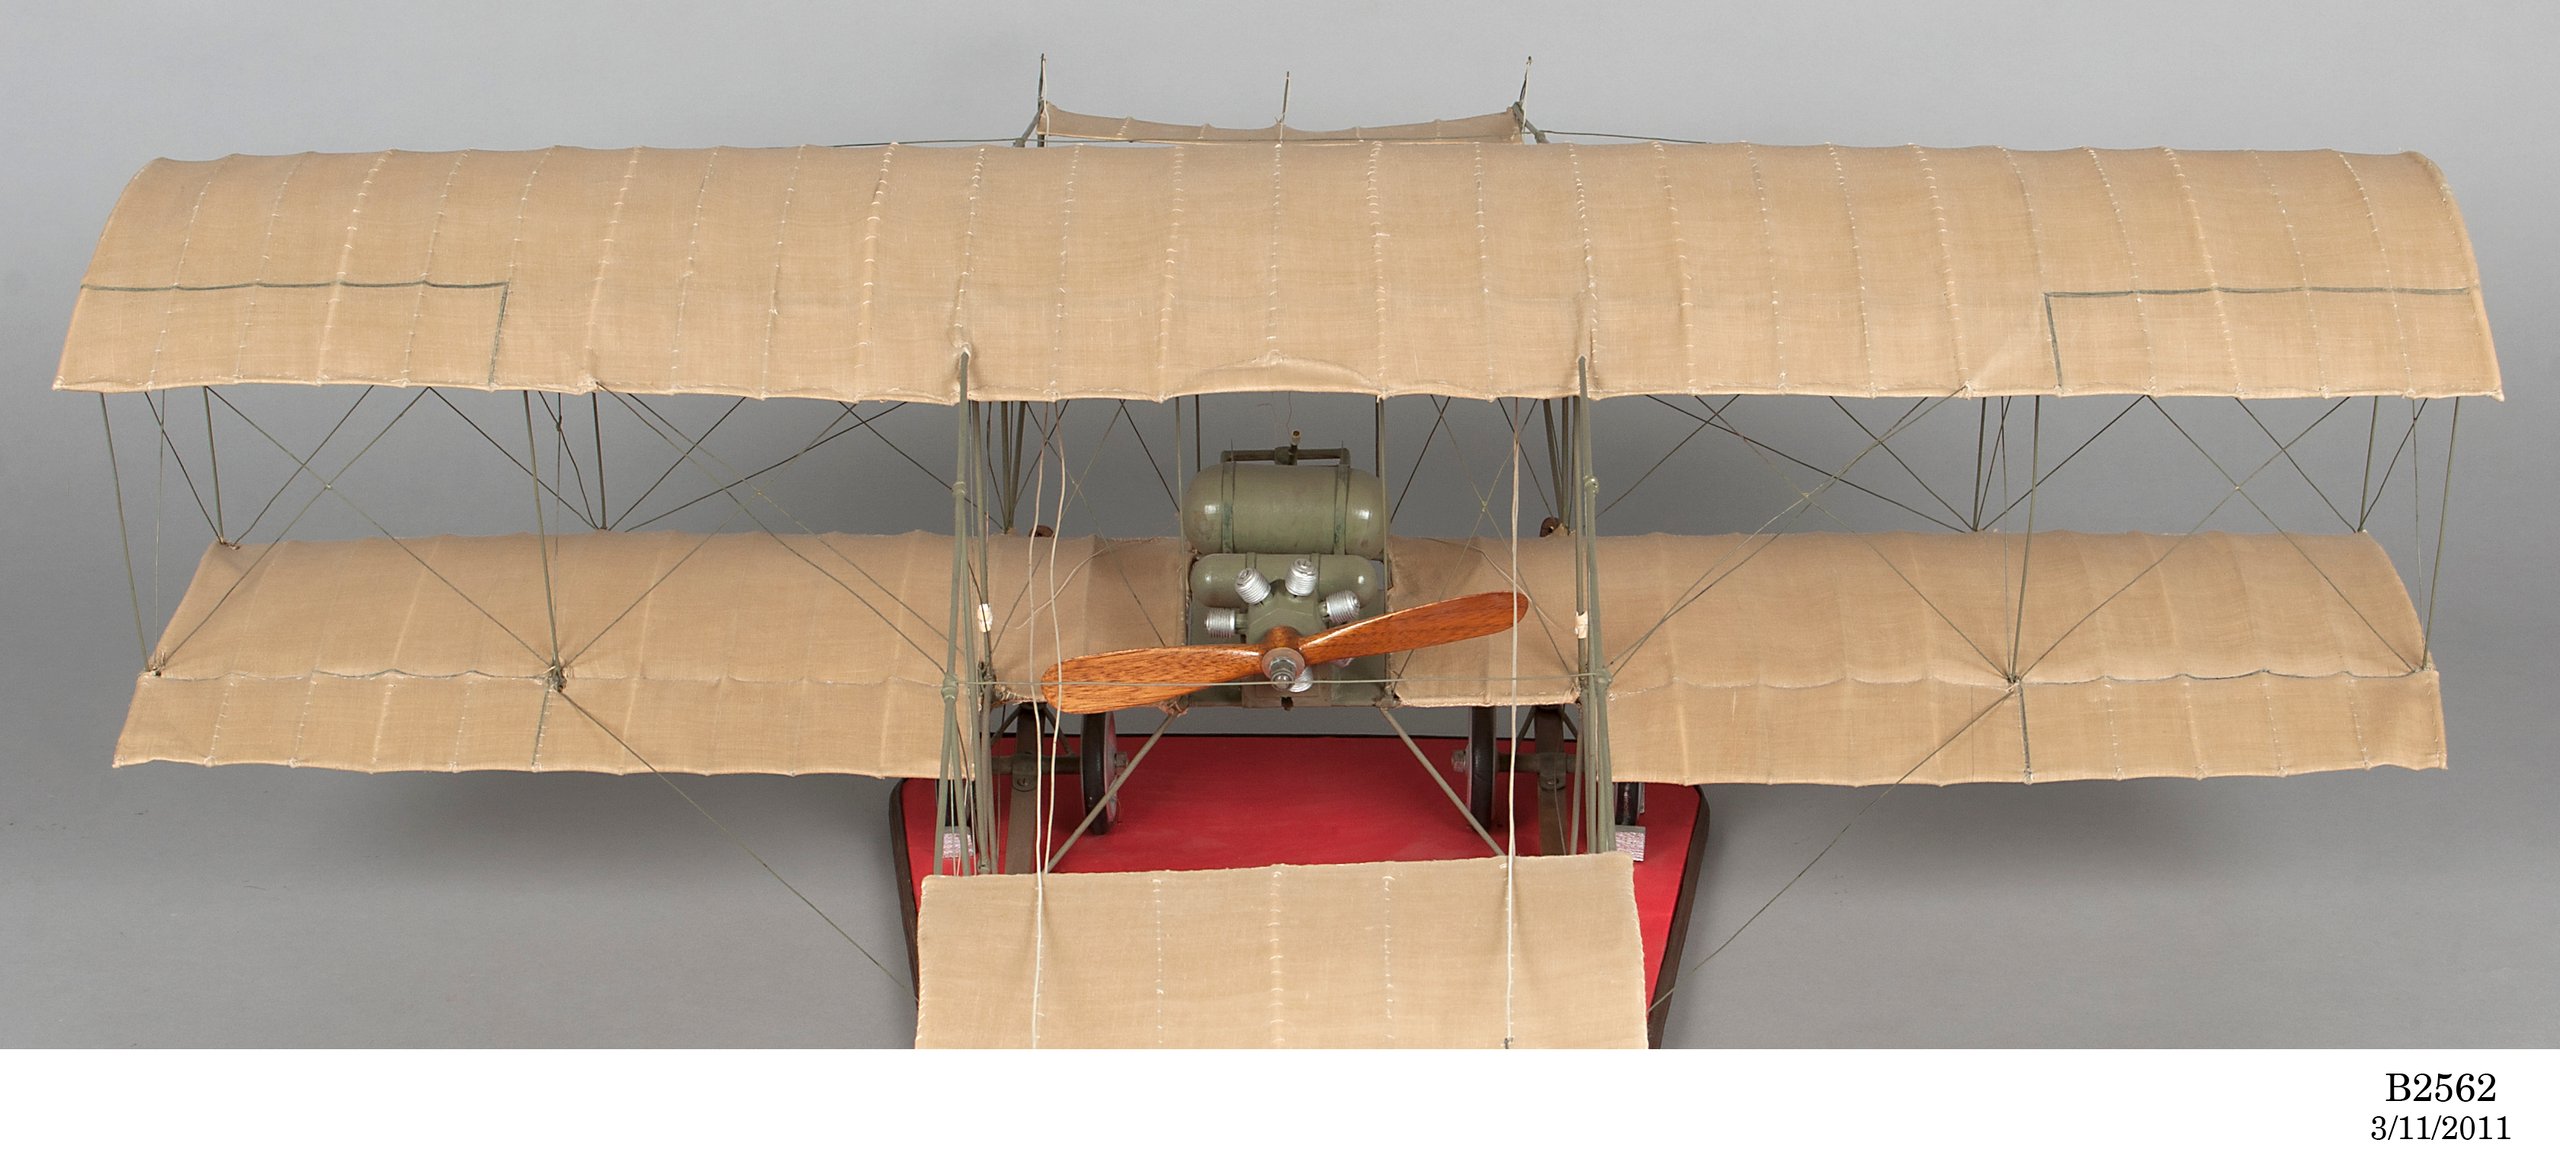 Aircraft model of the Bristol Box-kite by W E Hart and J Hammond